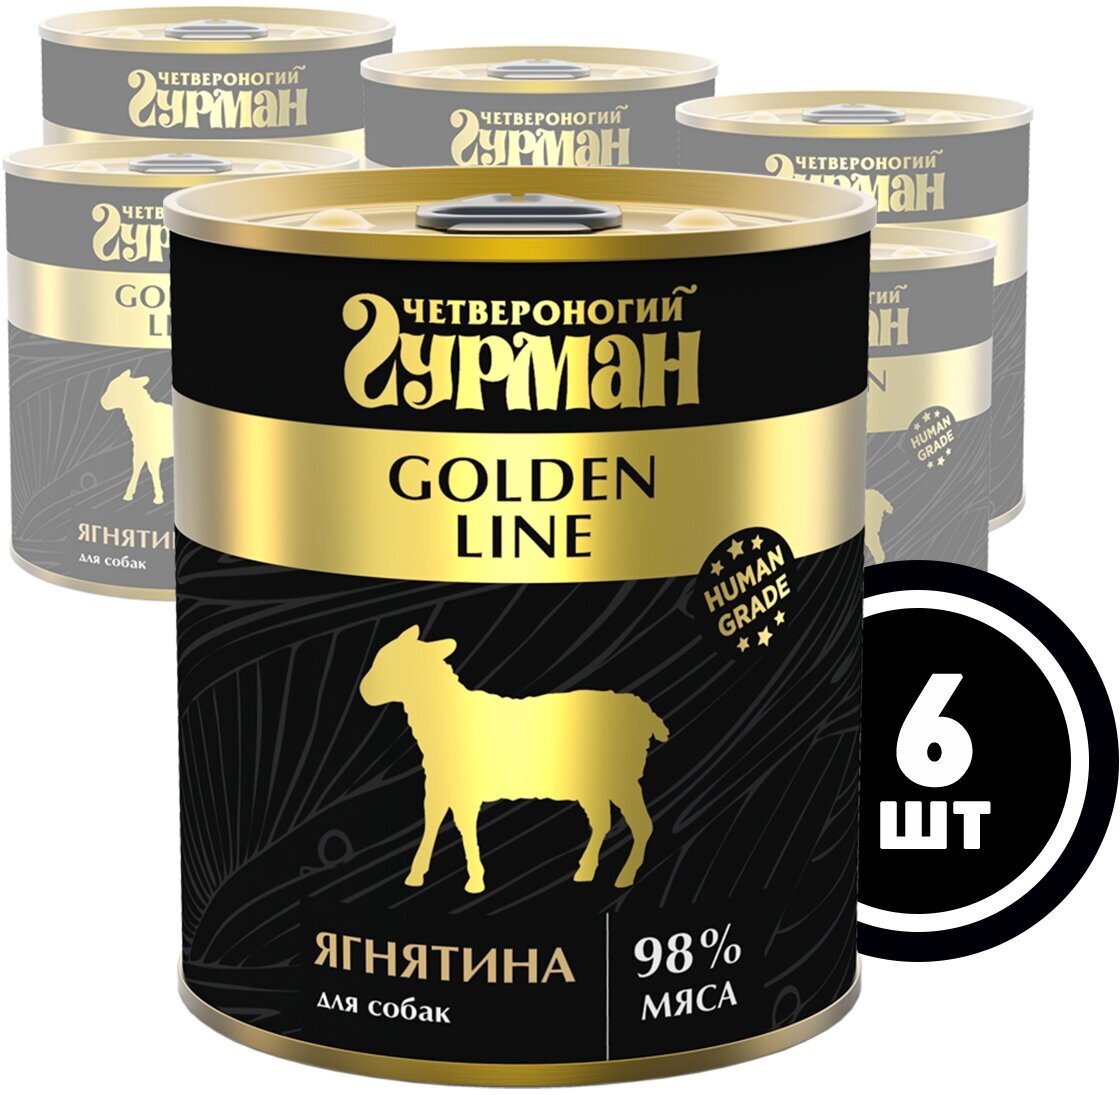 Корм консервированный для собак Четвероногий Гурман "Golden line Ягнятина", 340 г х 6 шт.